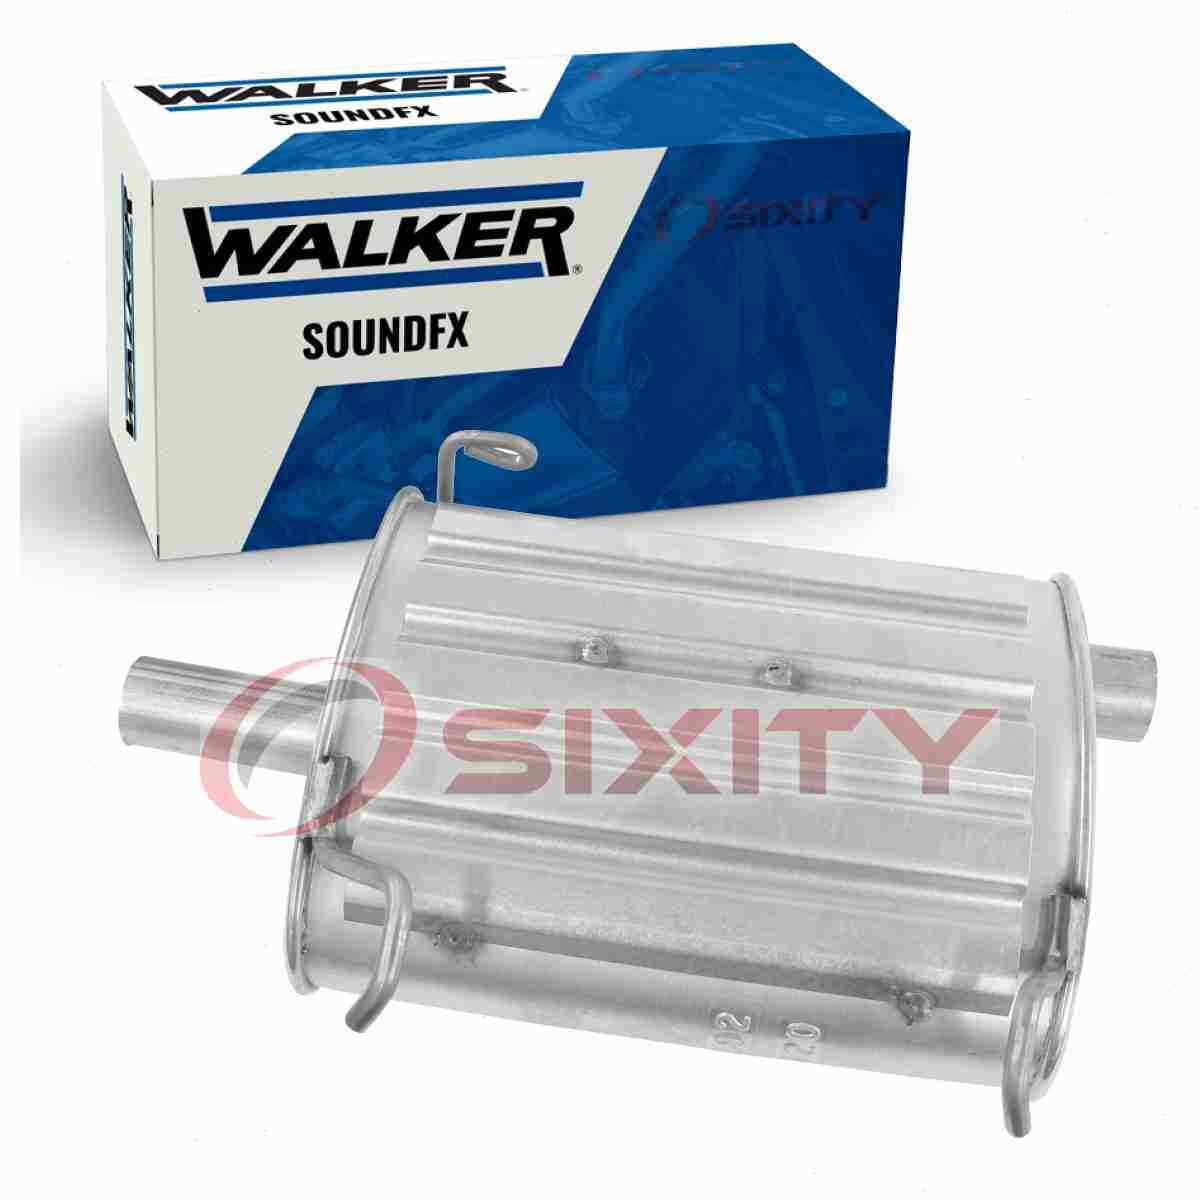 Walker SoundFX Exhaust Muffler for 1989-1991 Chevrolet Sprint 1.0L L3 mv